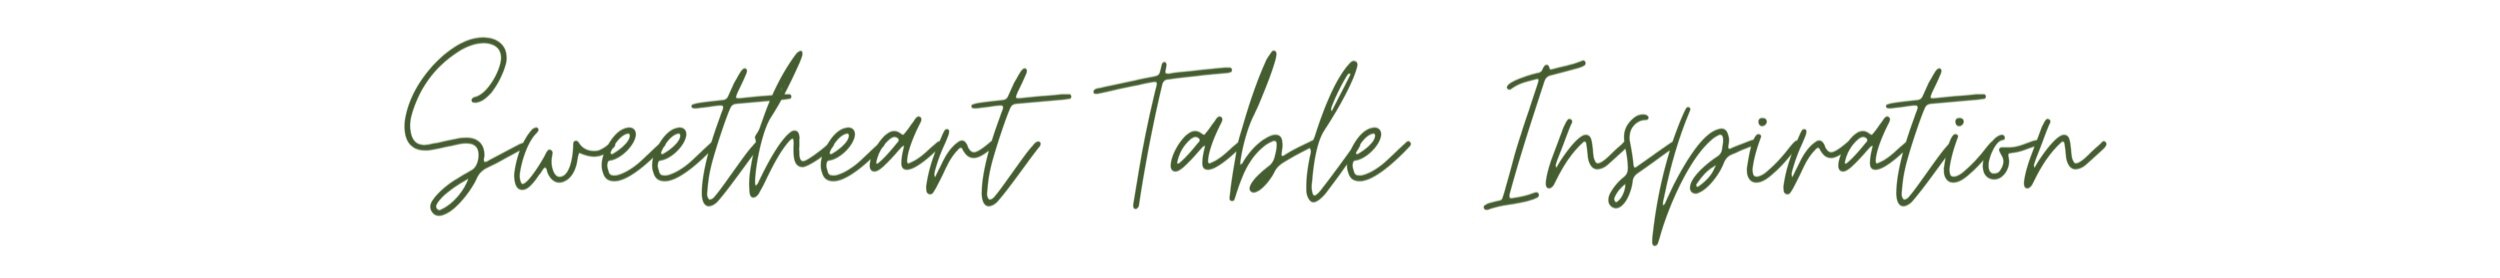 Sweetheart+table+inspiration.jpg